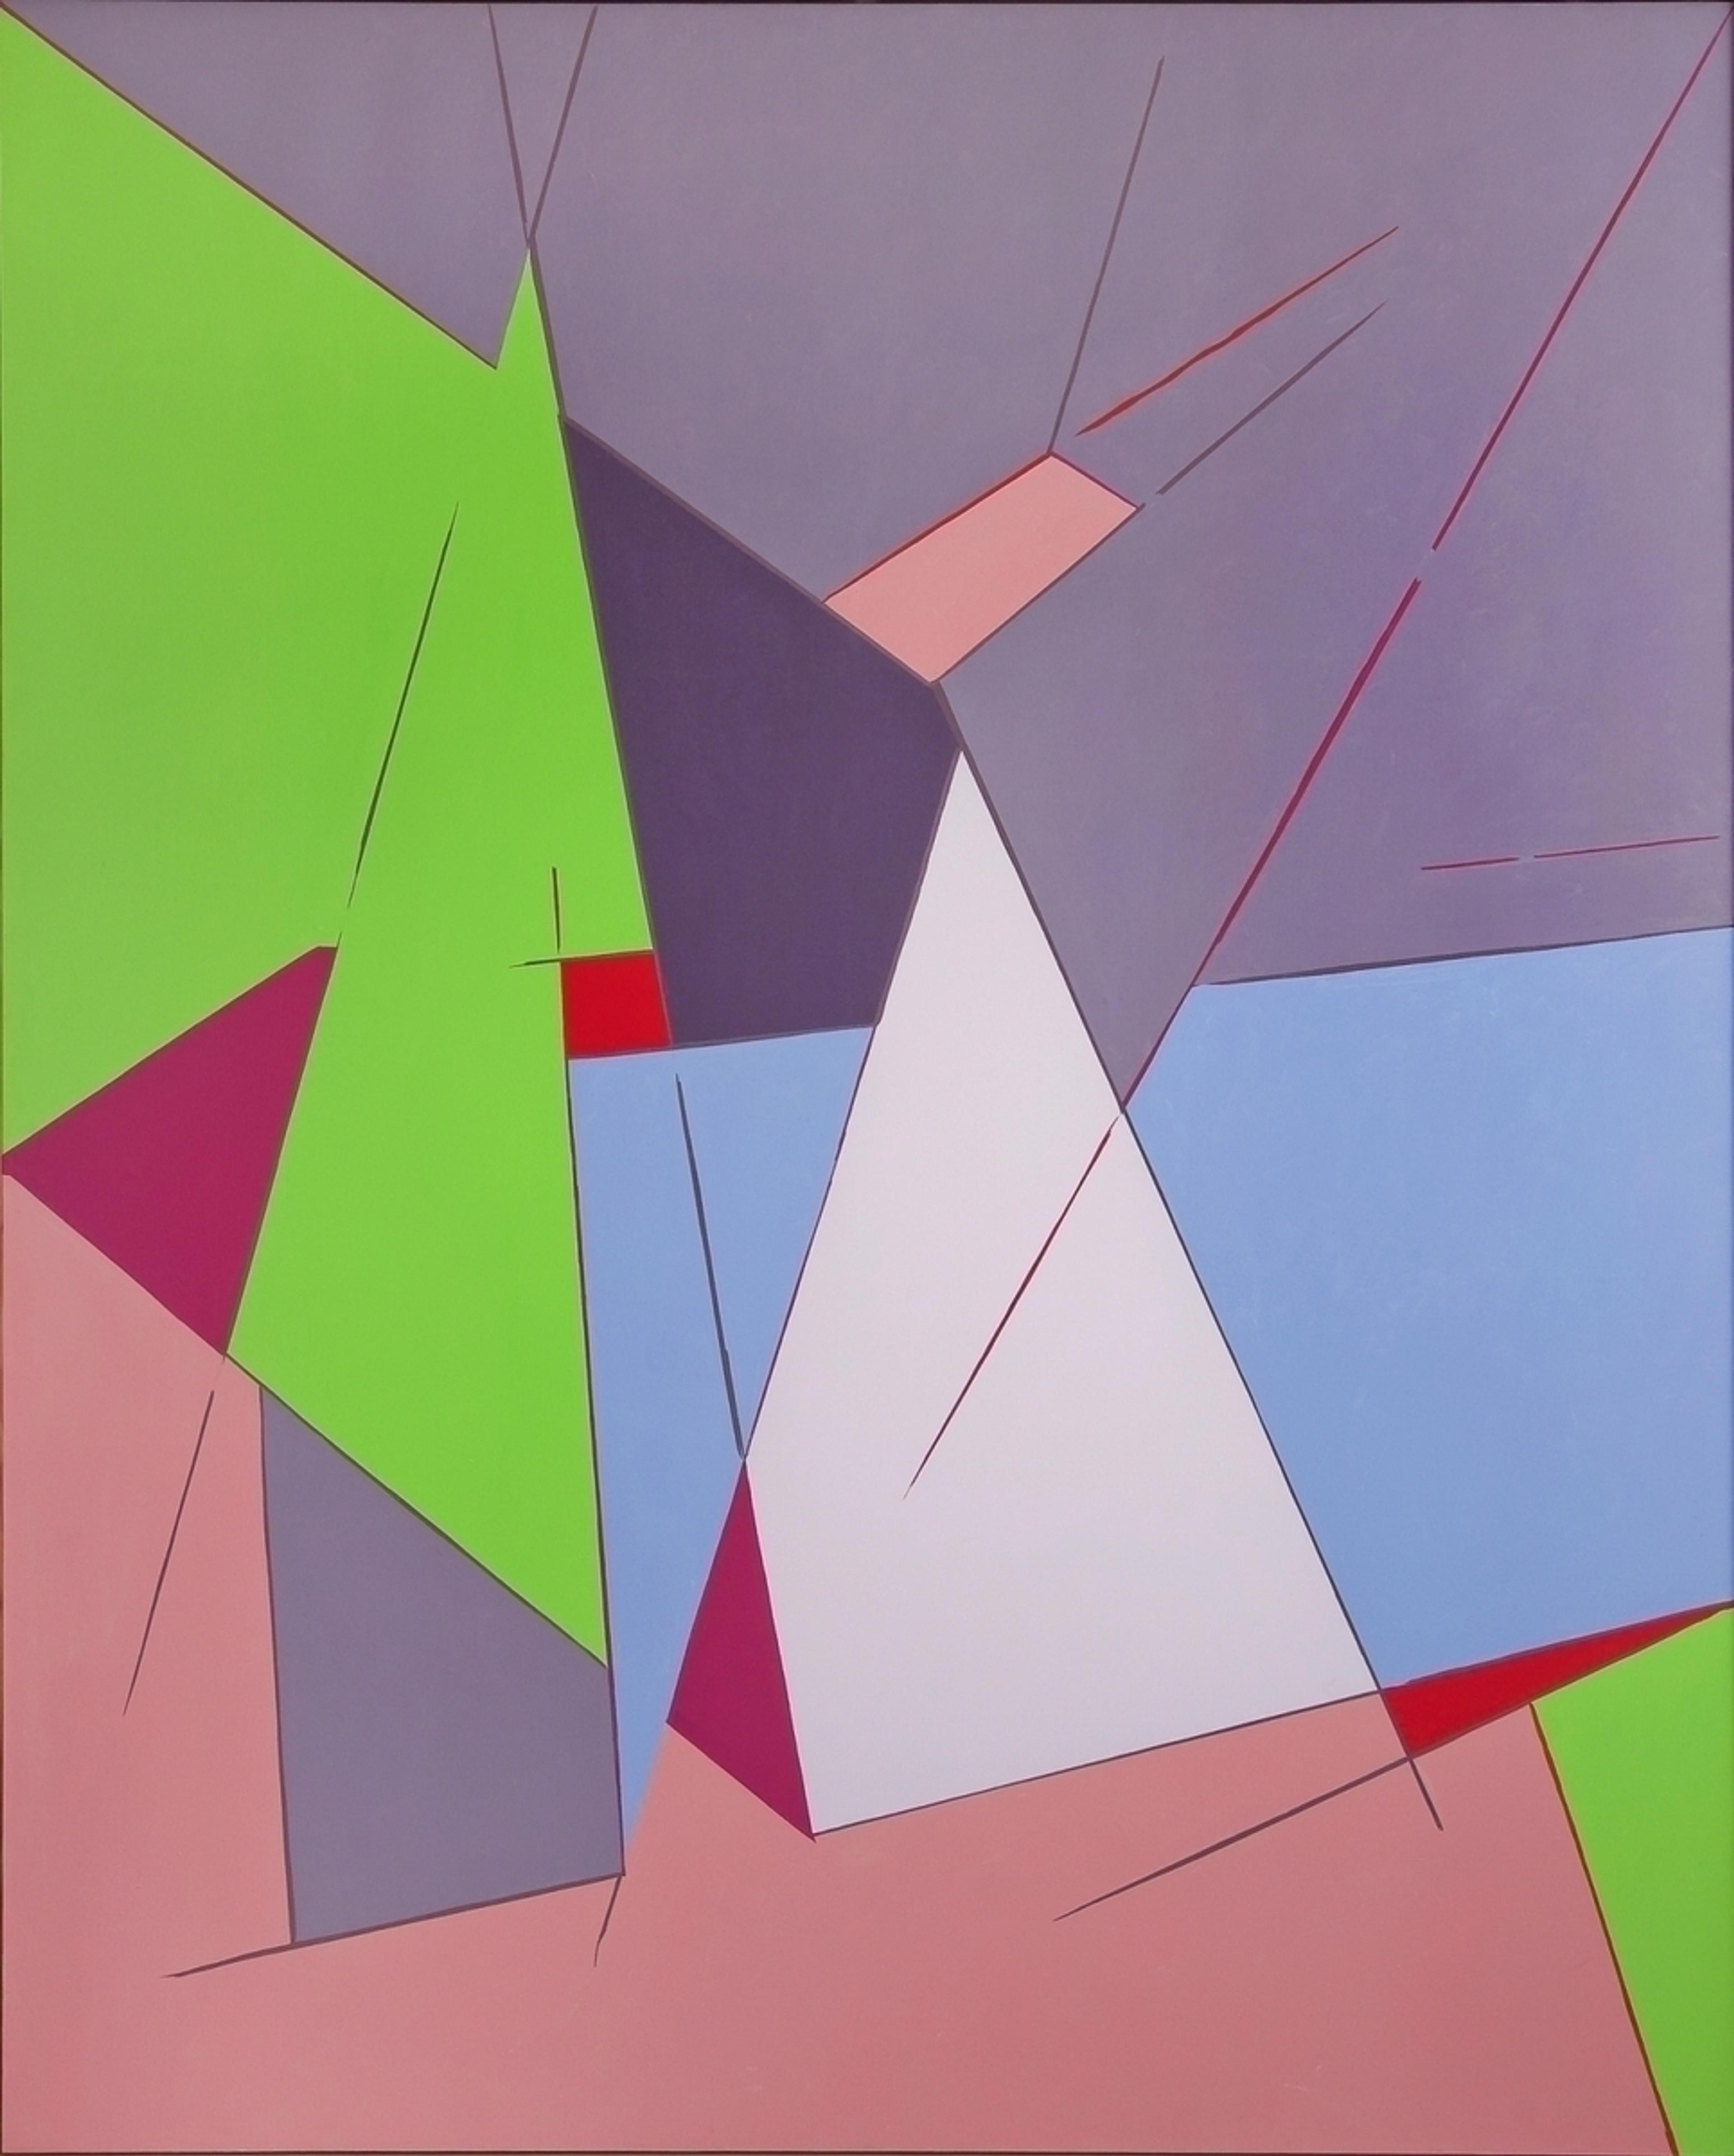 Et abstrakt maleri i rosa, lilla, blått, grønt